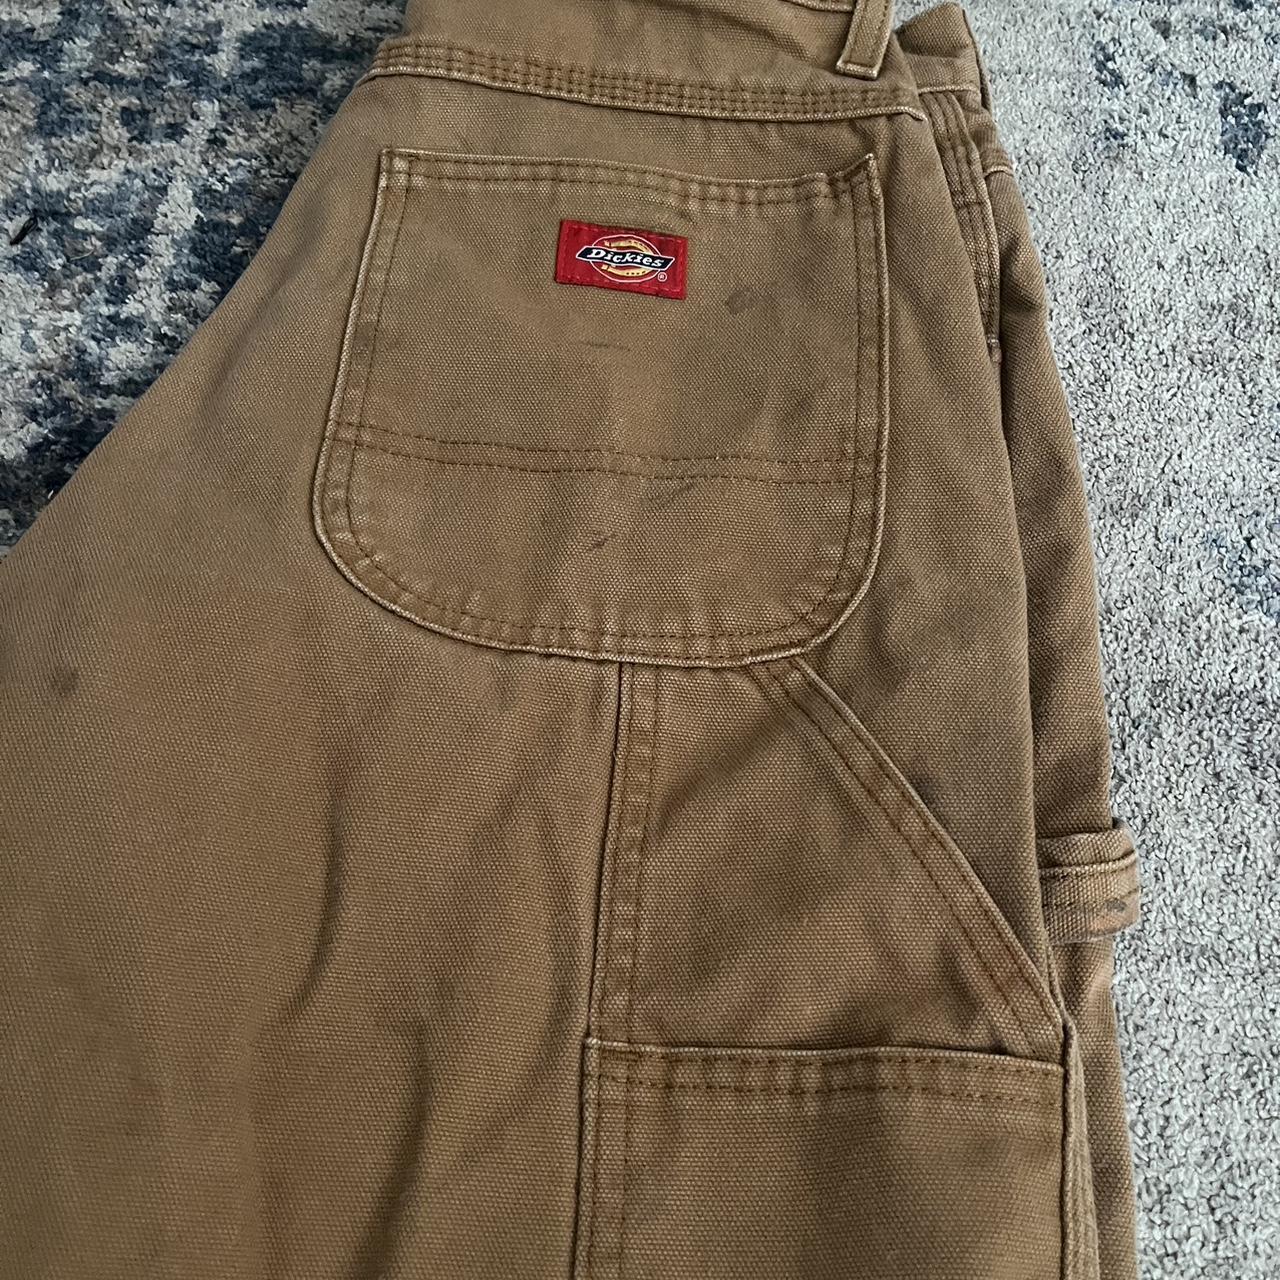 Light brown 30x30 Dickies carpenter pants. - Depop